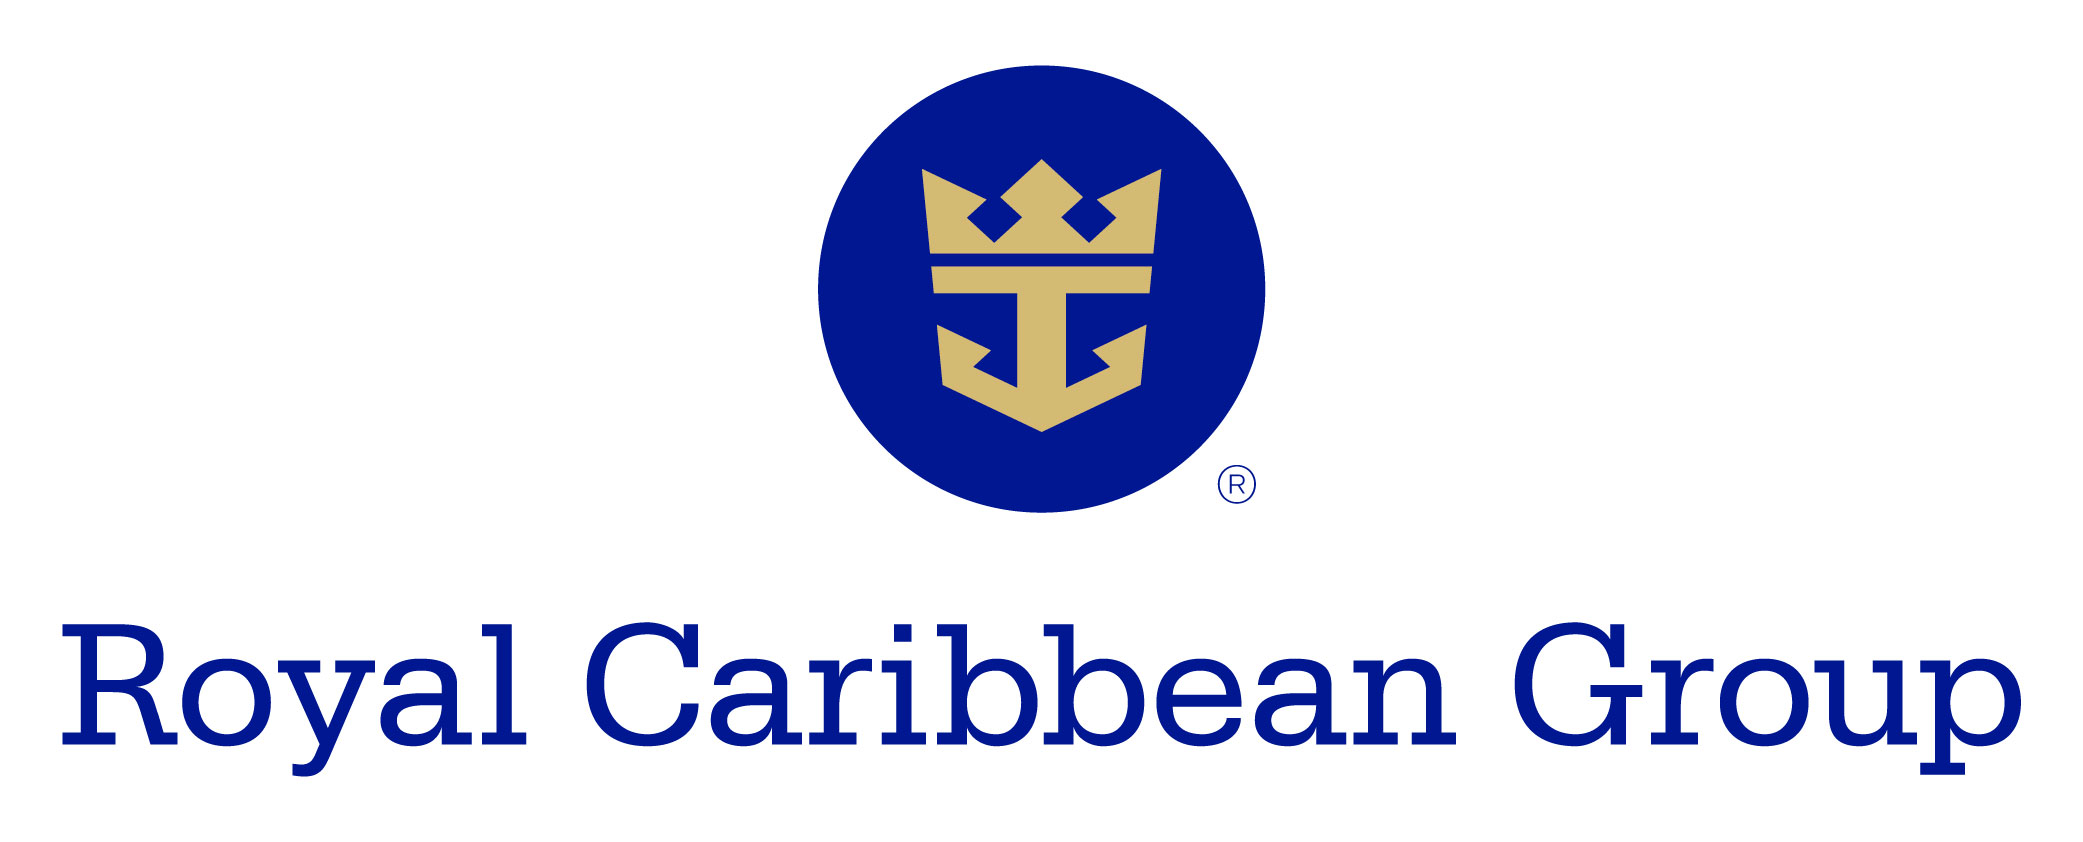 Royal Caribbean Group